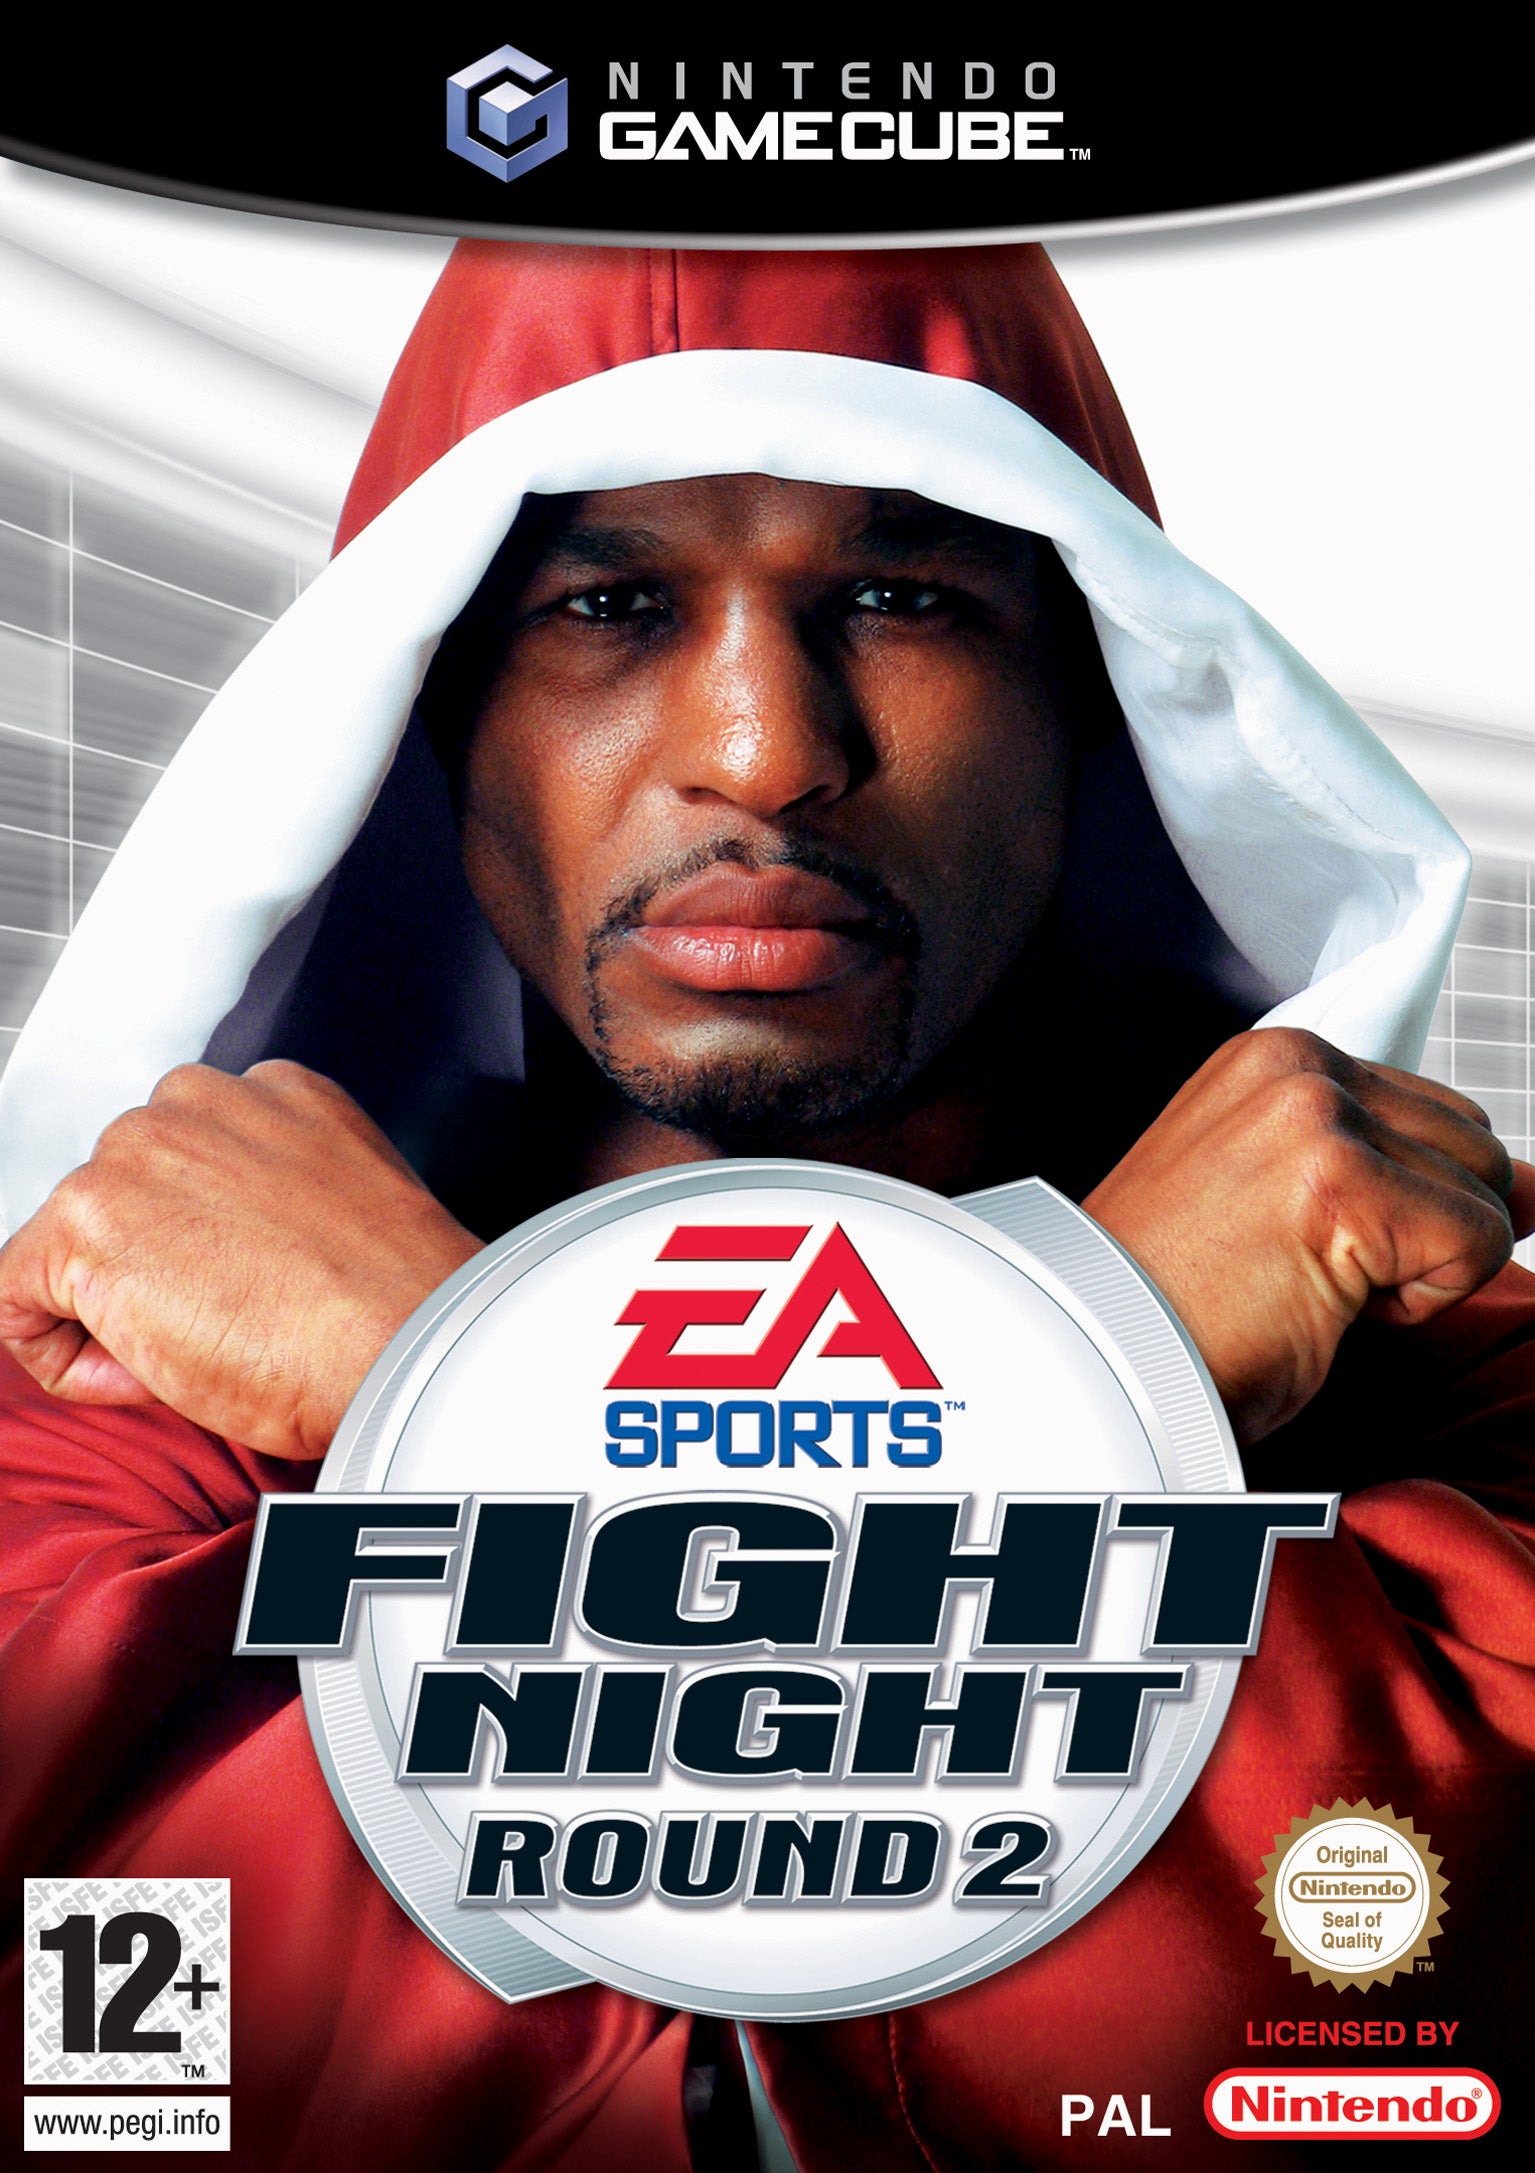 Game | Nintendo GameCube | Fight Night Round 2